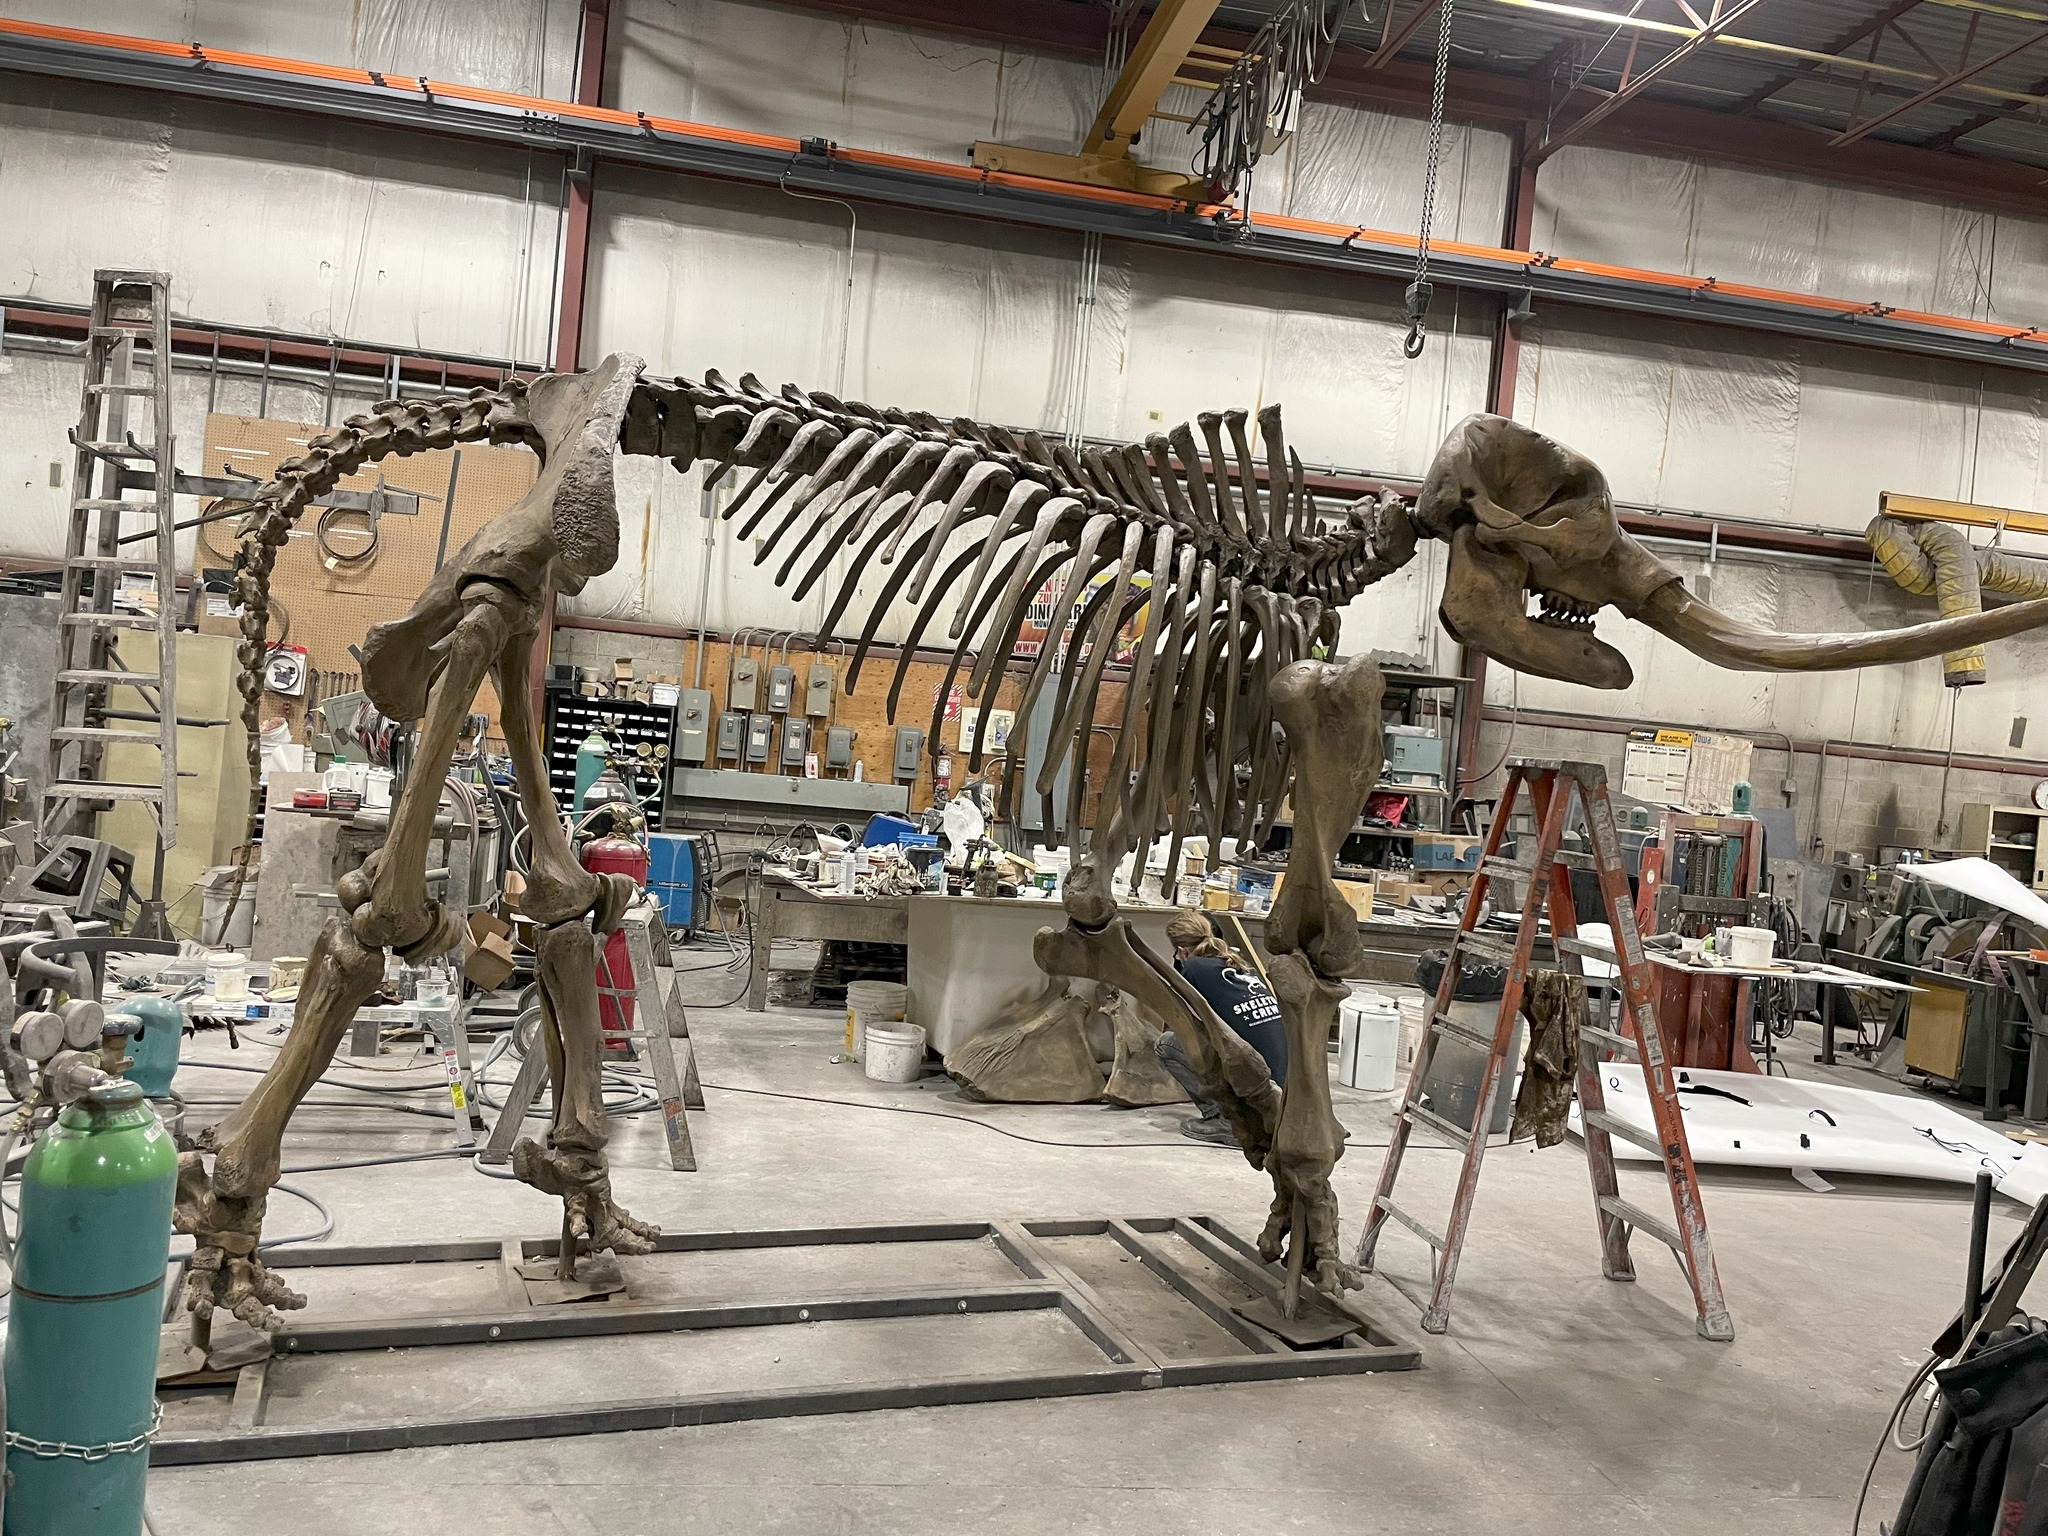 Mastodon Casting - Nova Scotia Museum of Natural History